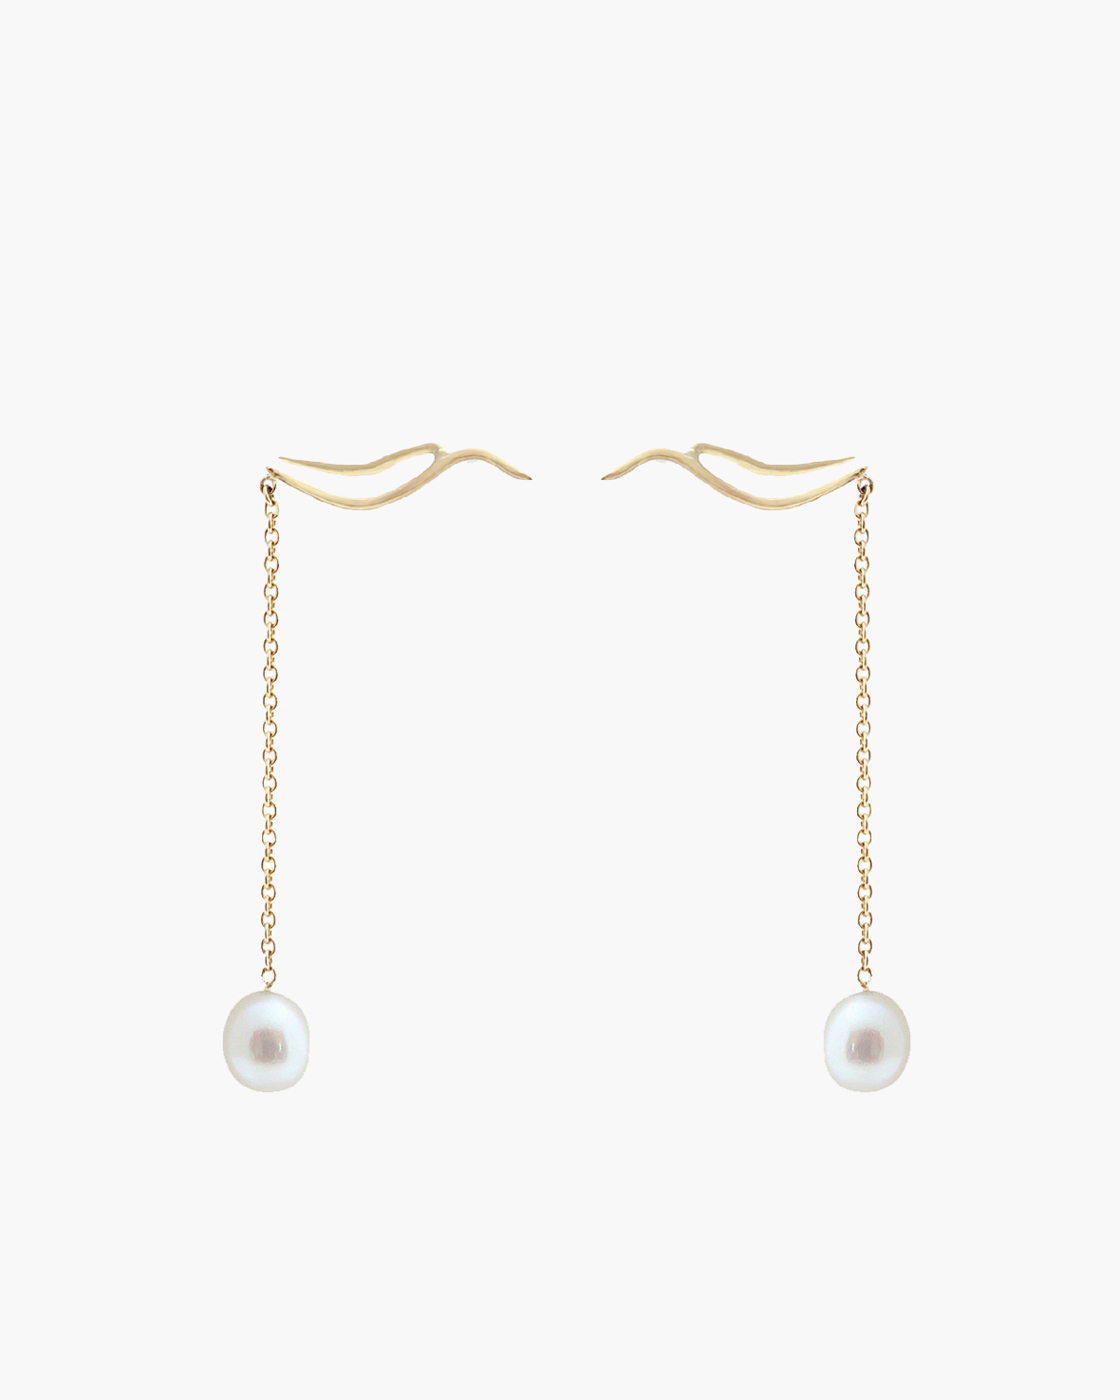 Tina Pearl Gold Earrings